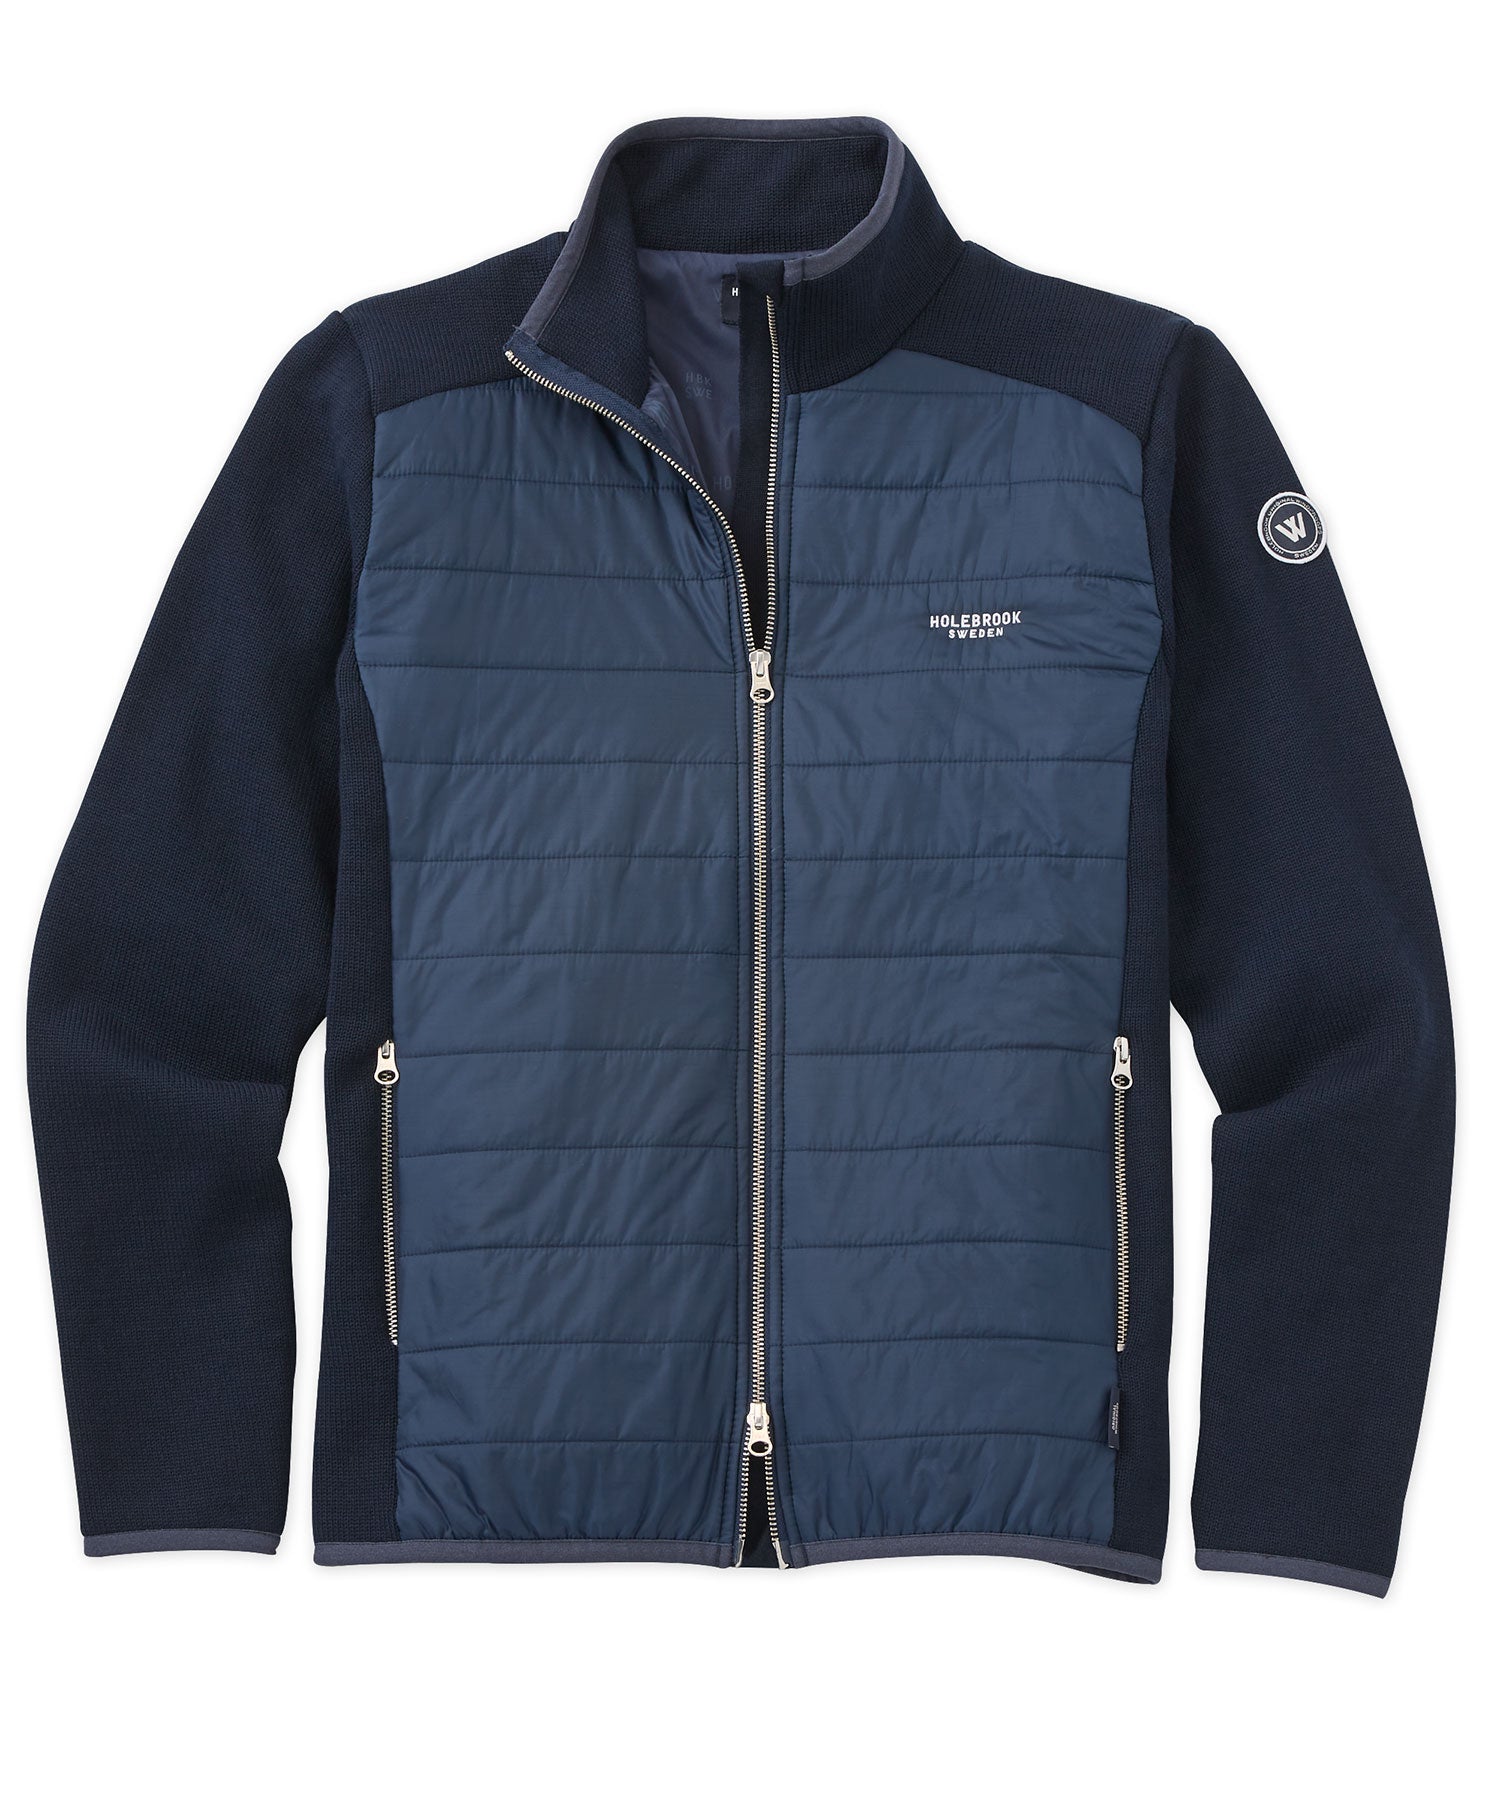 Holebrook Sweden Zip-Front Quilted Windproof Jacket, Men's Big & Tall